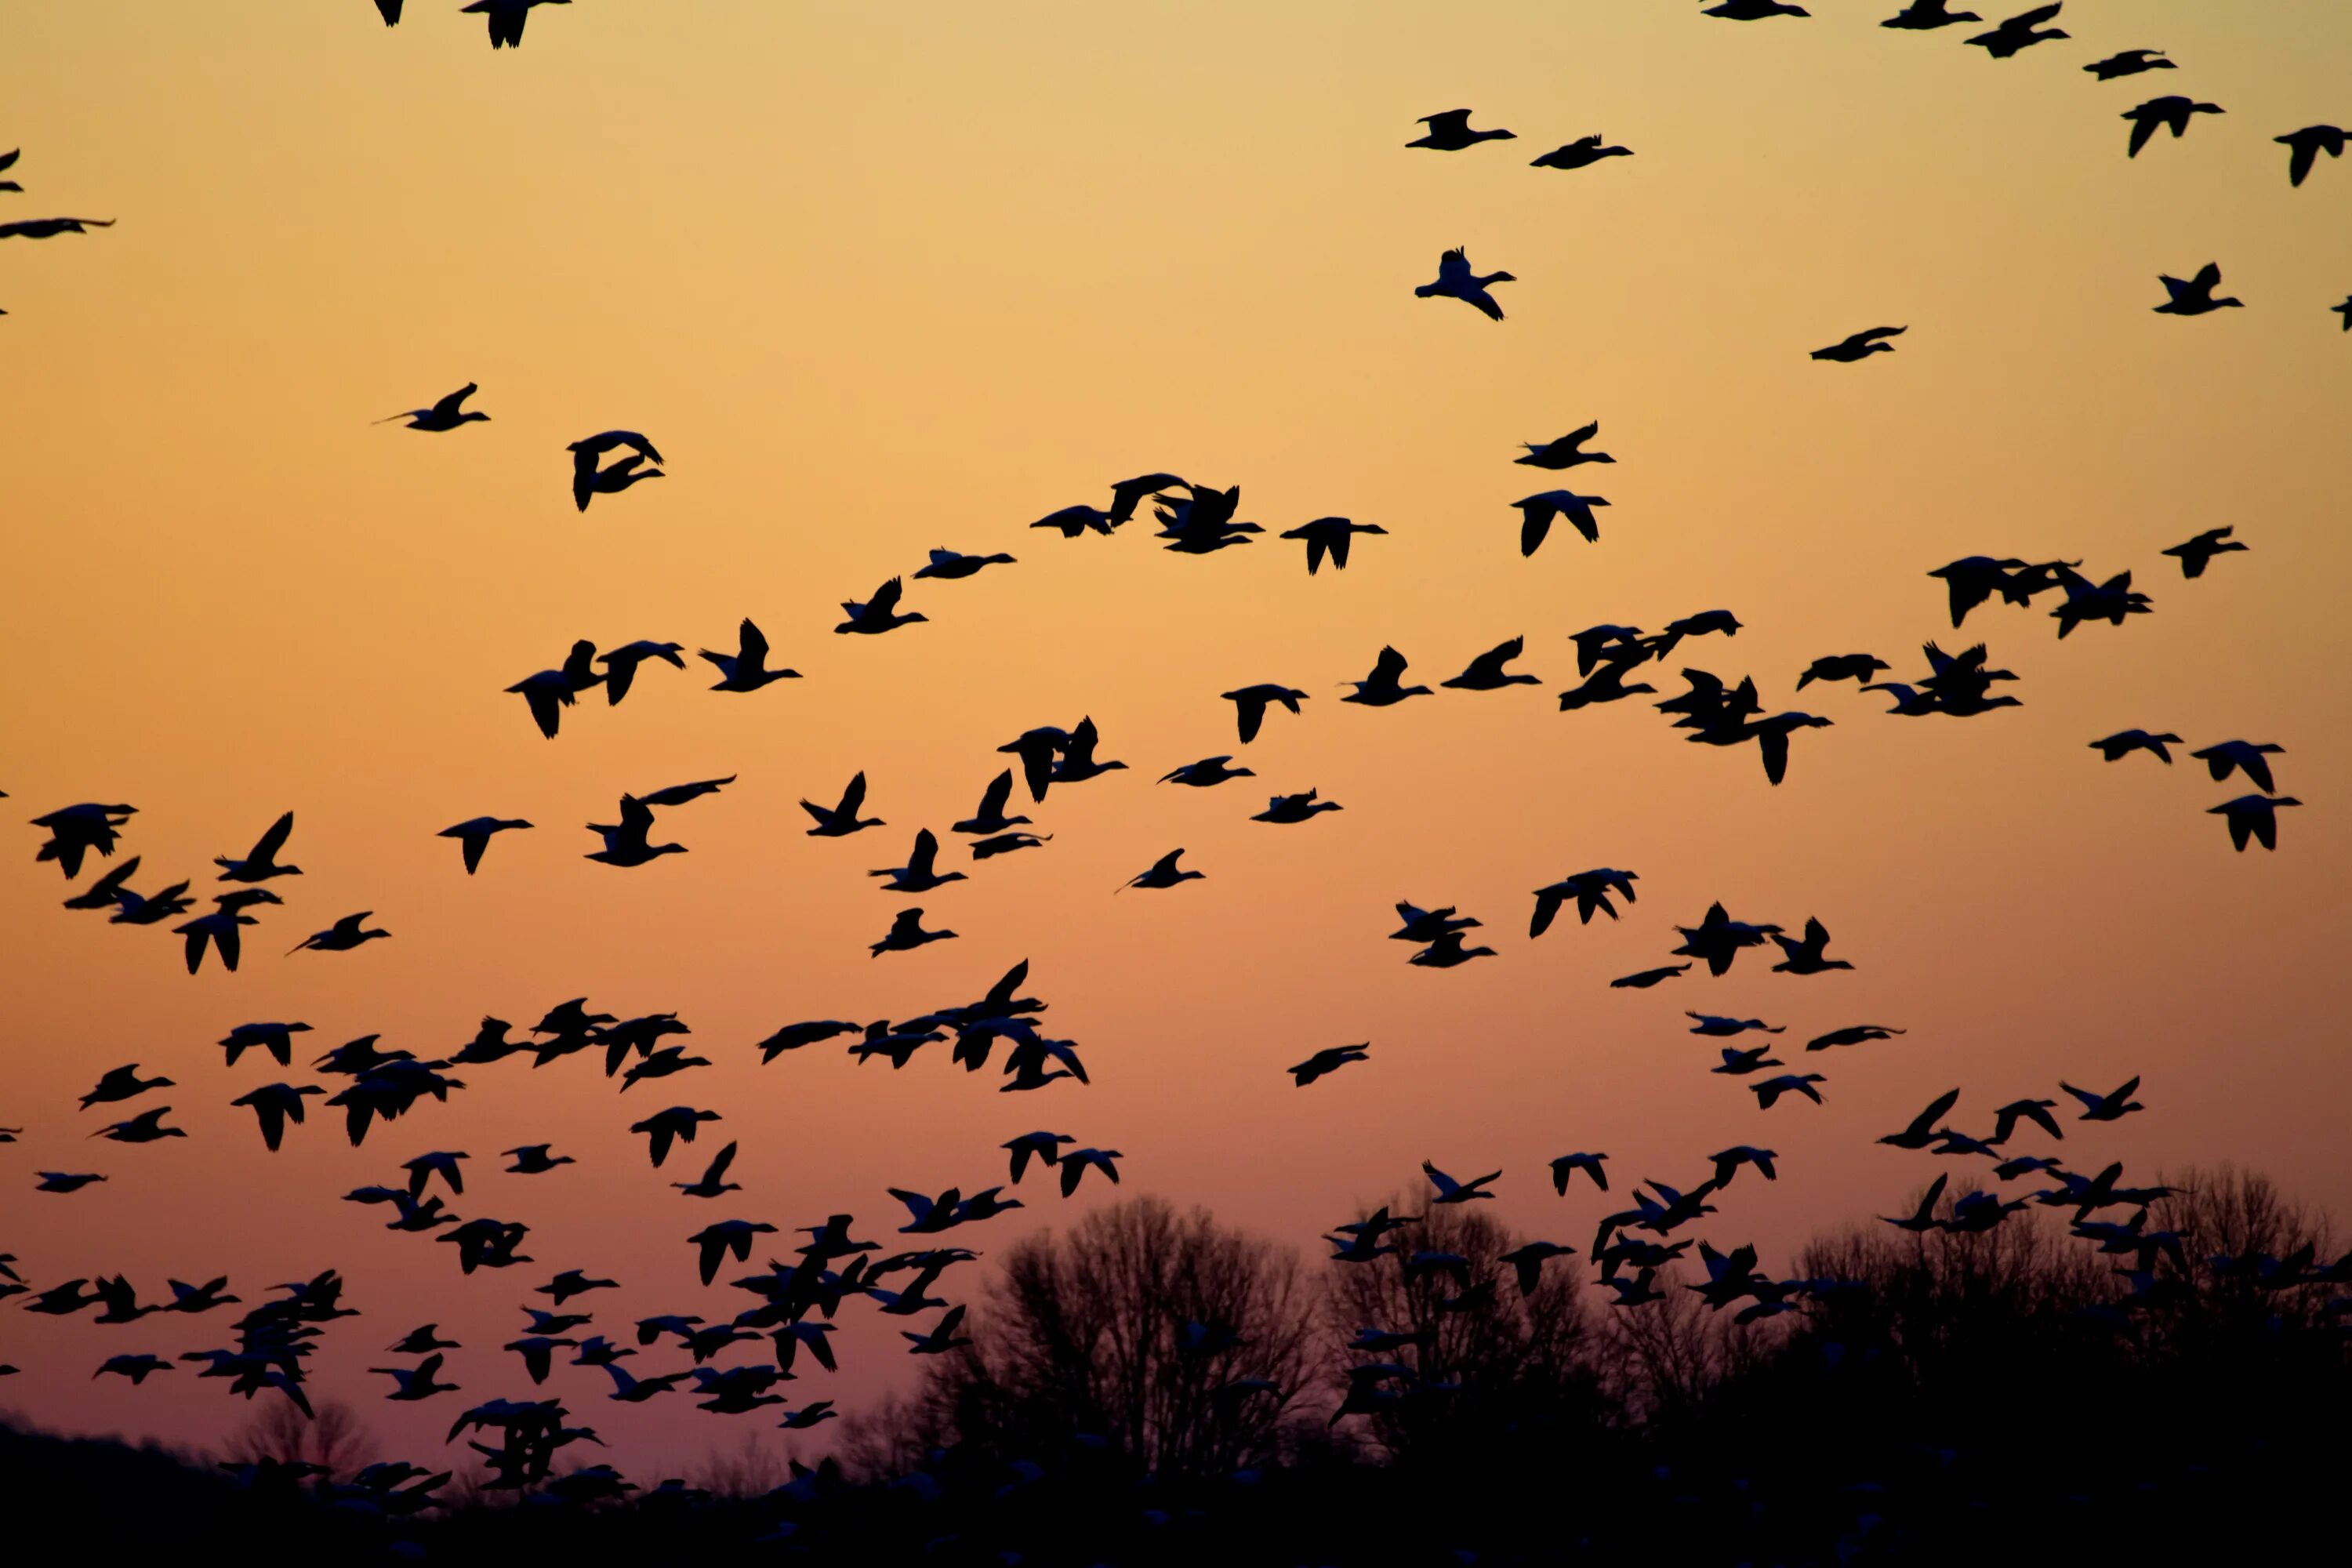 Flock of birds. Стая птиц. Стая птиц в небе. Птица летит. Много птиц в небе.